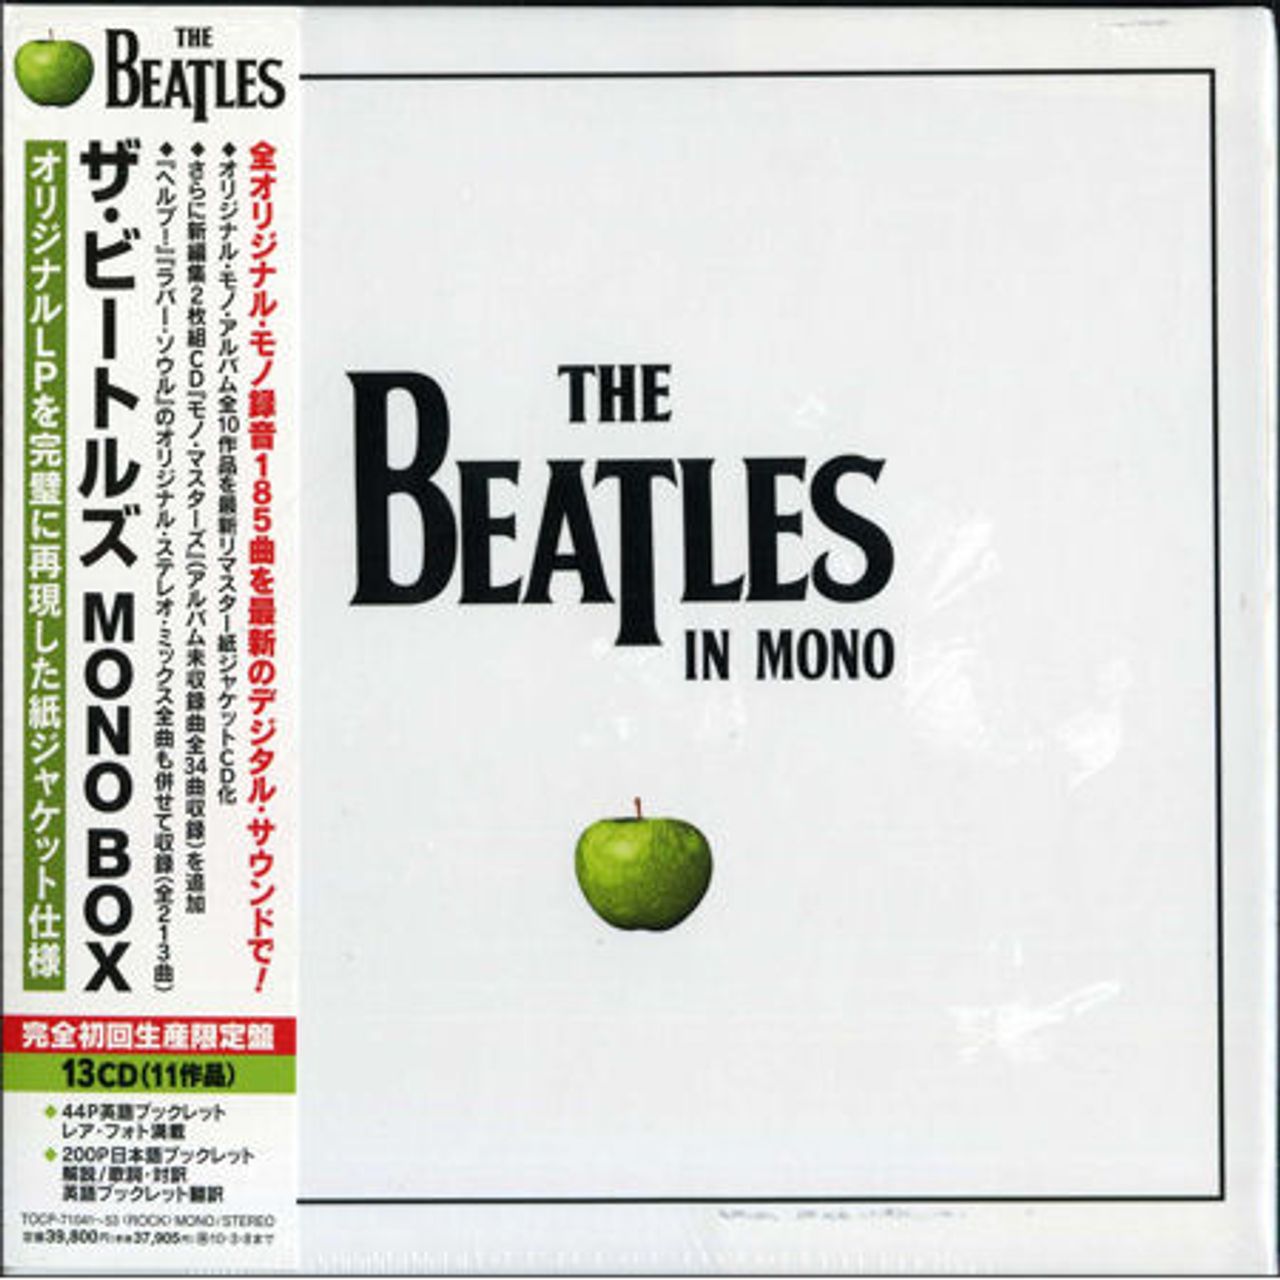 The Beatles The Beatles In Mono Japanese CD album — RareVinyl.com